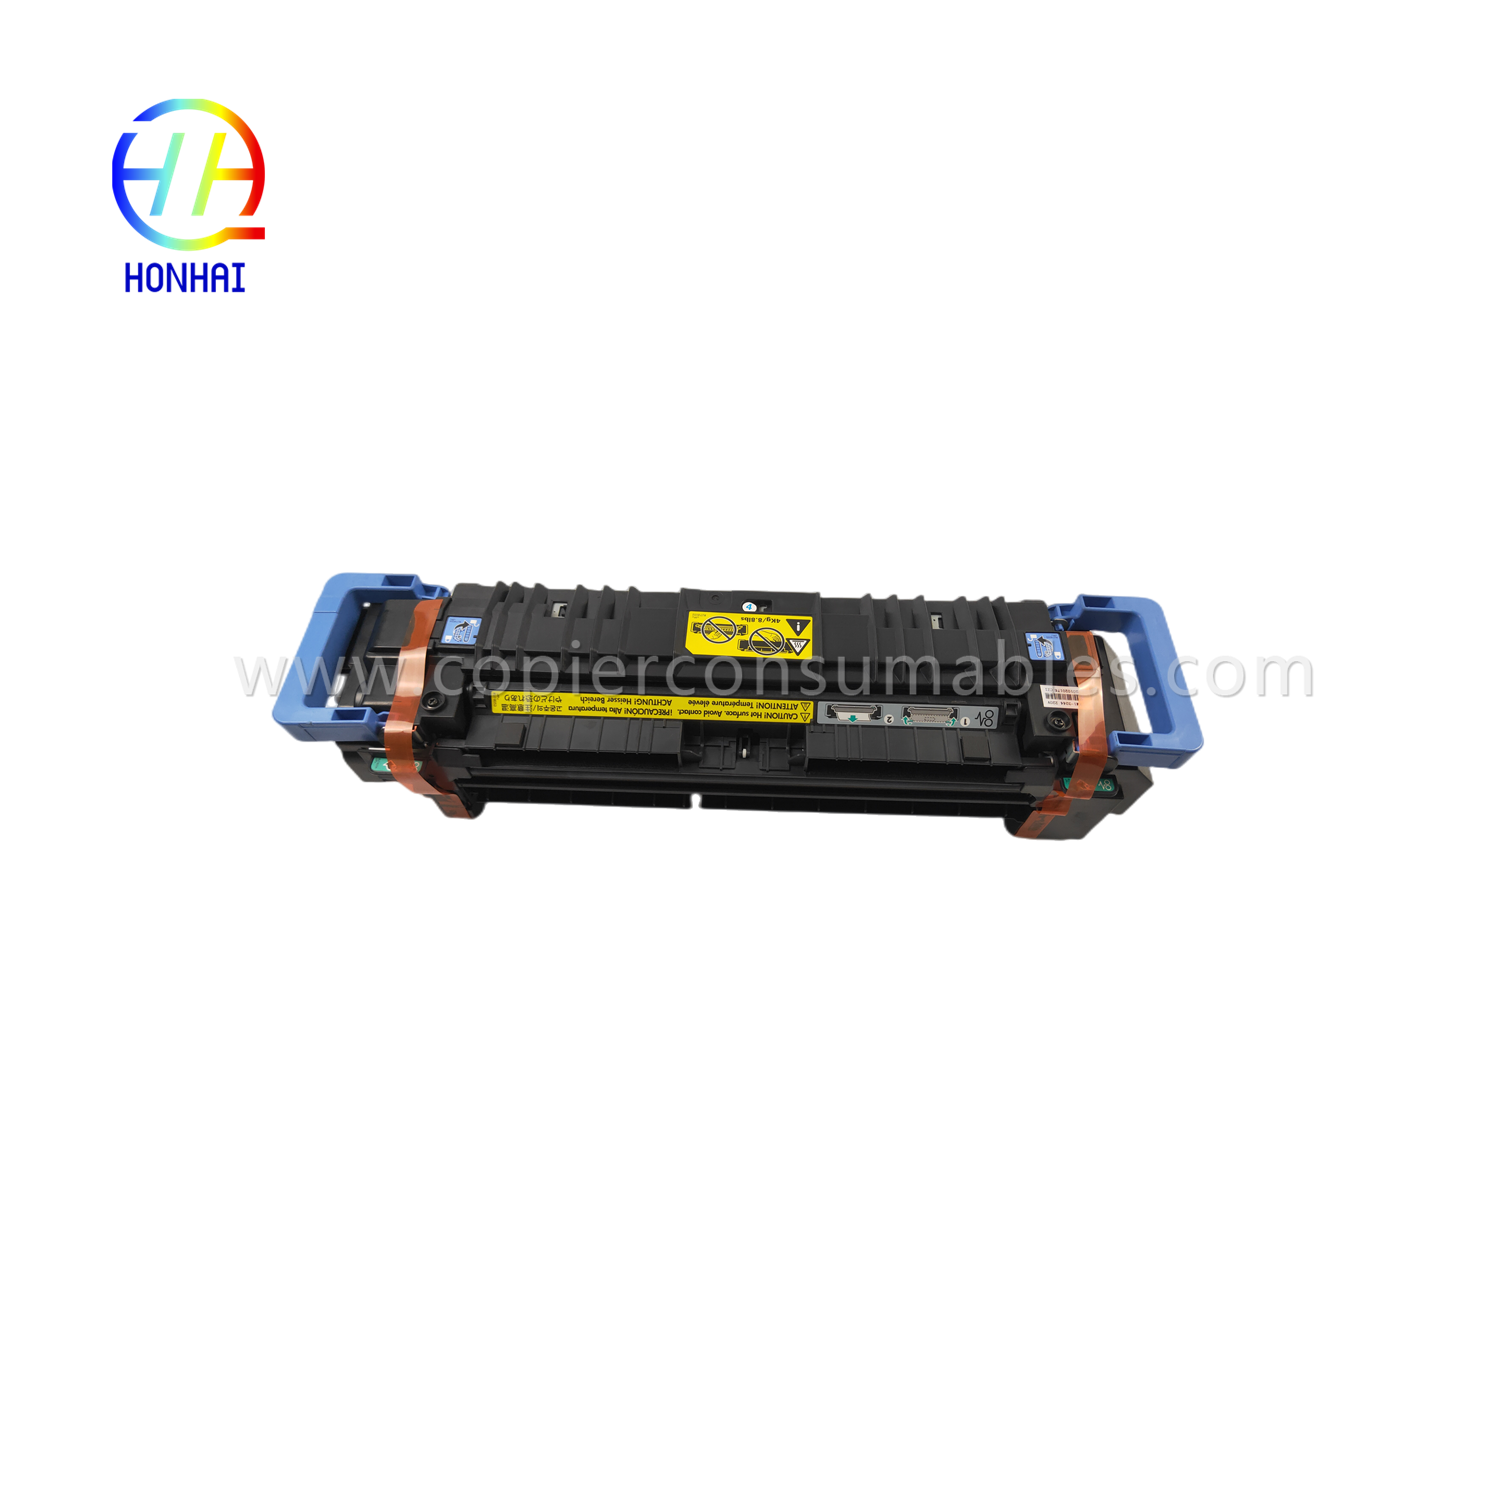 https://www.copierconsumables.com/fuser-assemble-unit-for-hp-m855-m880-m855dn-m855xh-m880z-m880z-c1n54-67901-c1n58-67901-fusing-heating-fixing-assy-producting